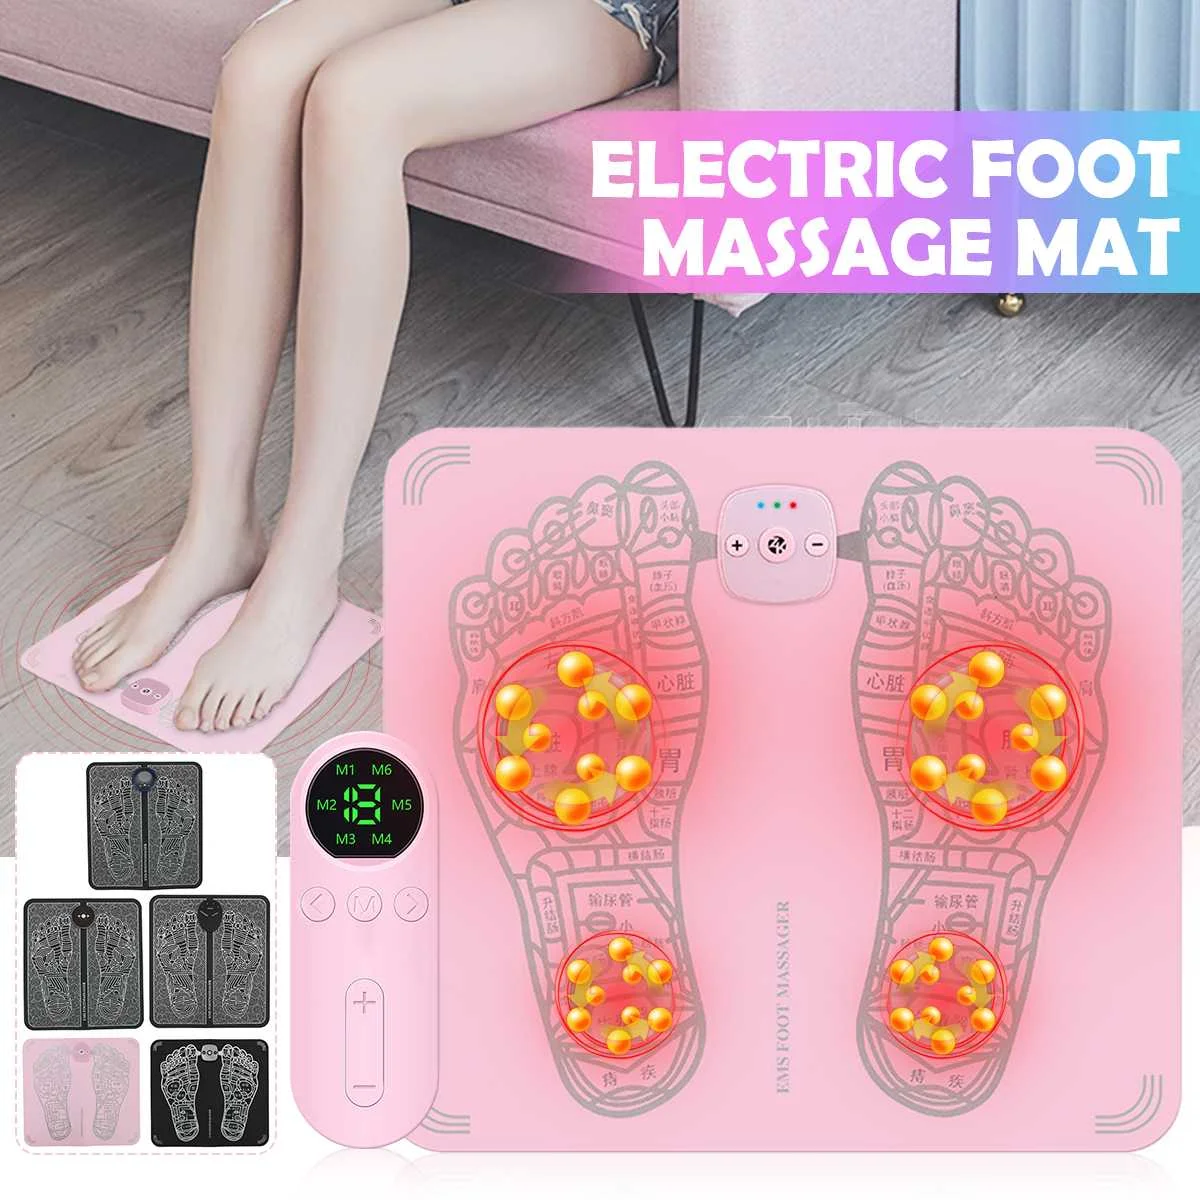 

Portable Smart Foot Massage Mat Pulse Electric Feet Muscle Stimulator Improve Blood Circulation Relieve Ache Pain Health Care